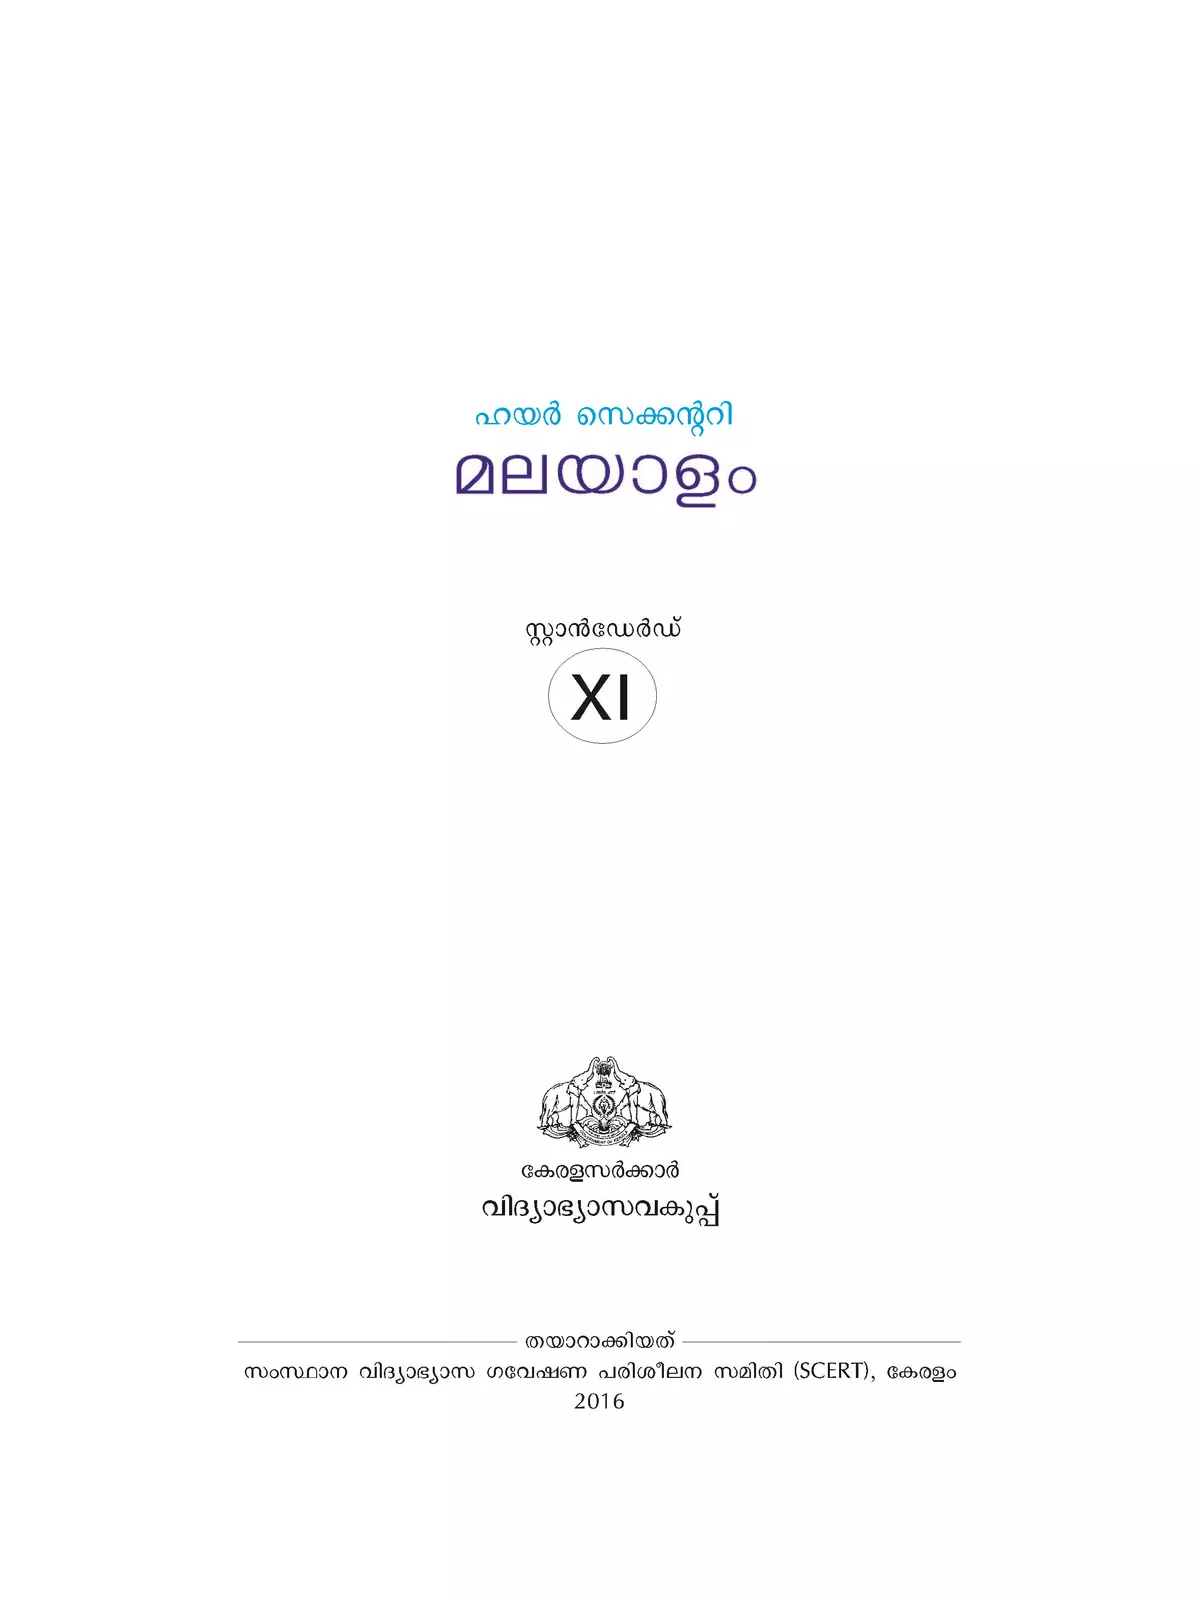 Plus One Malayalam Text Book